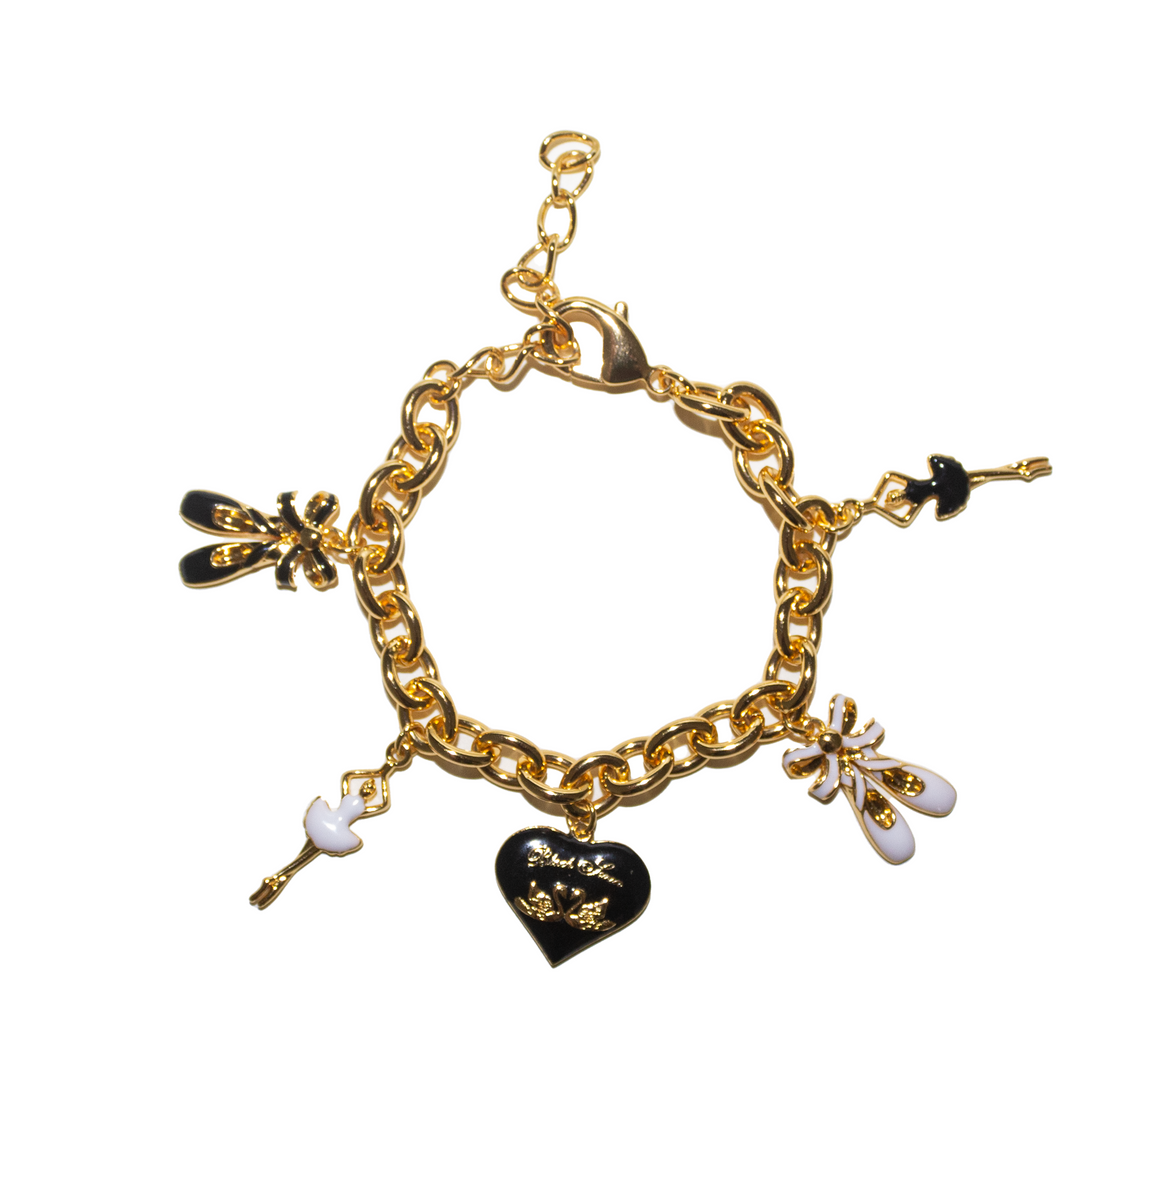 Build Your Own Gold & Rose Charm Bracelet